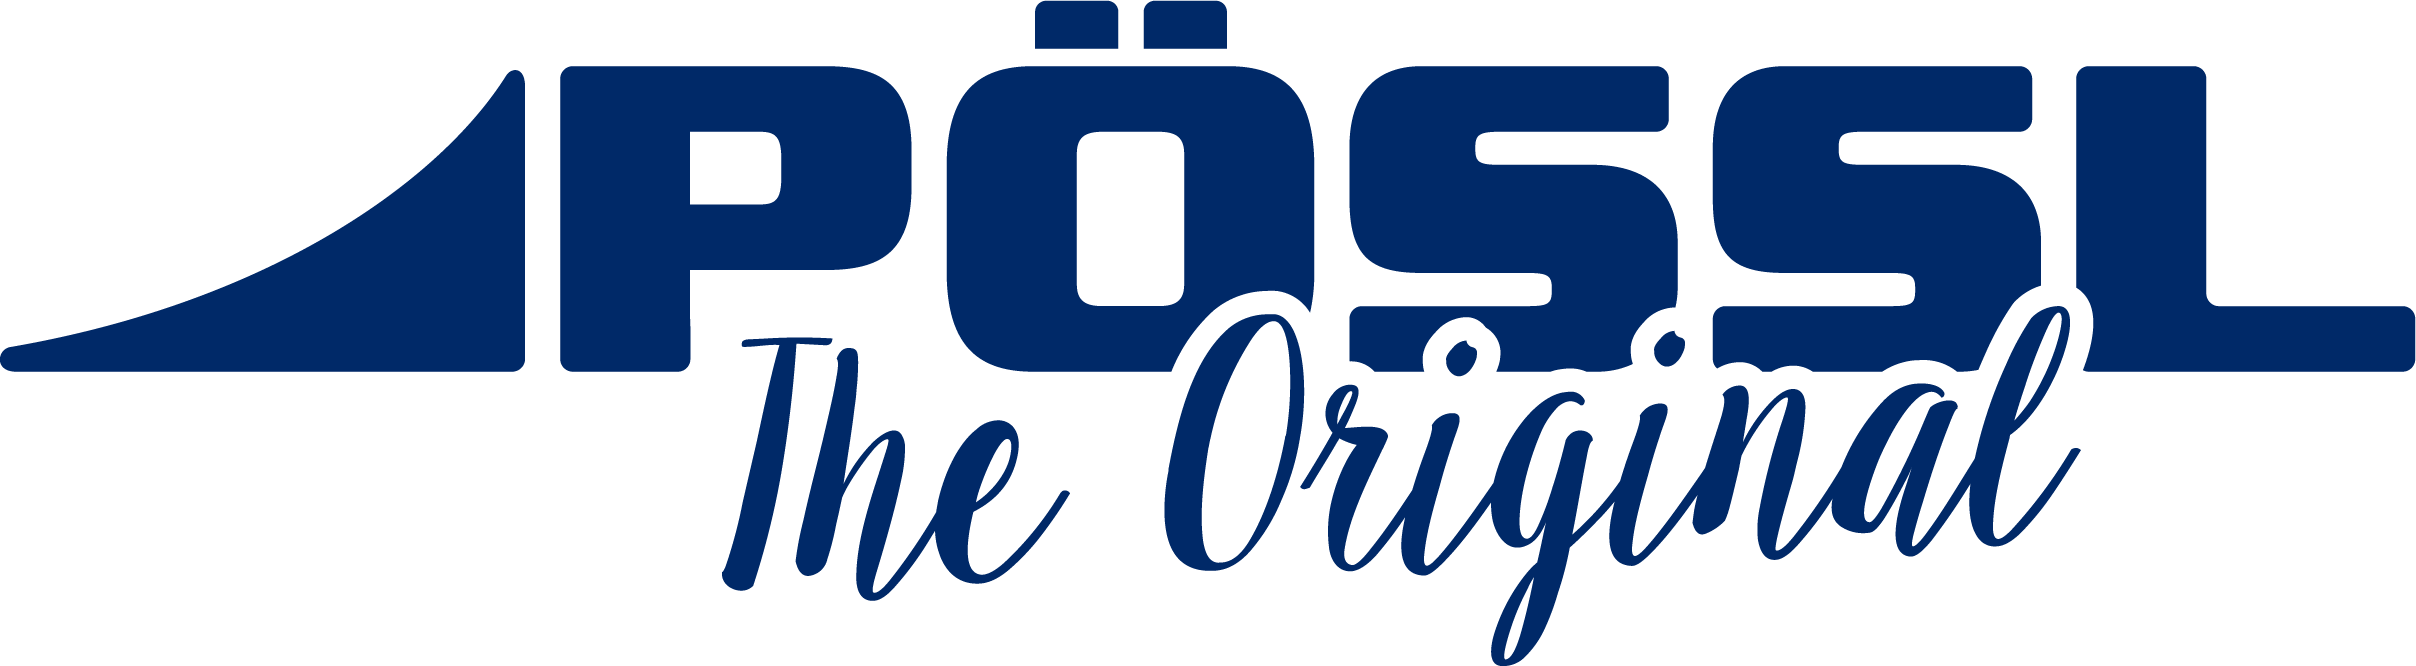 Pössl Logo